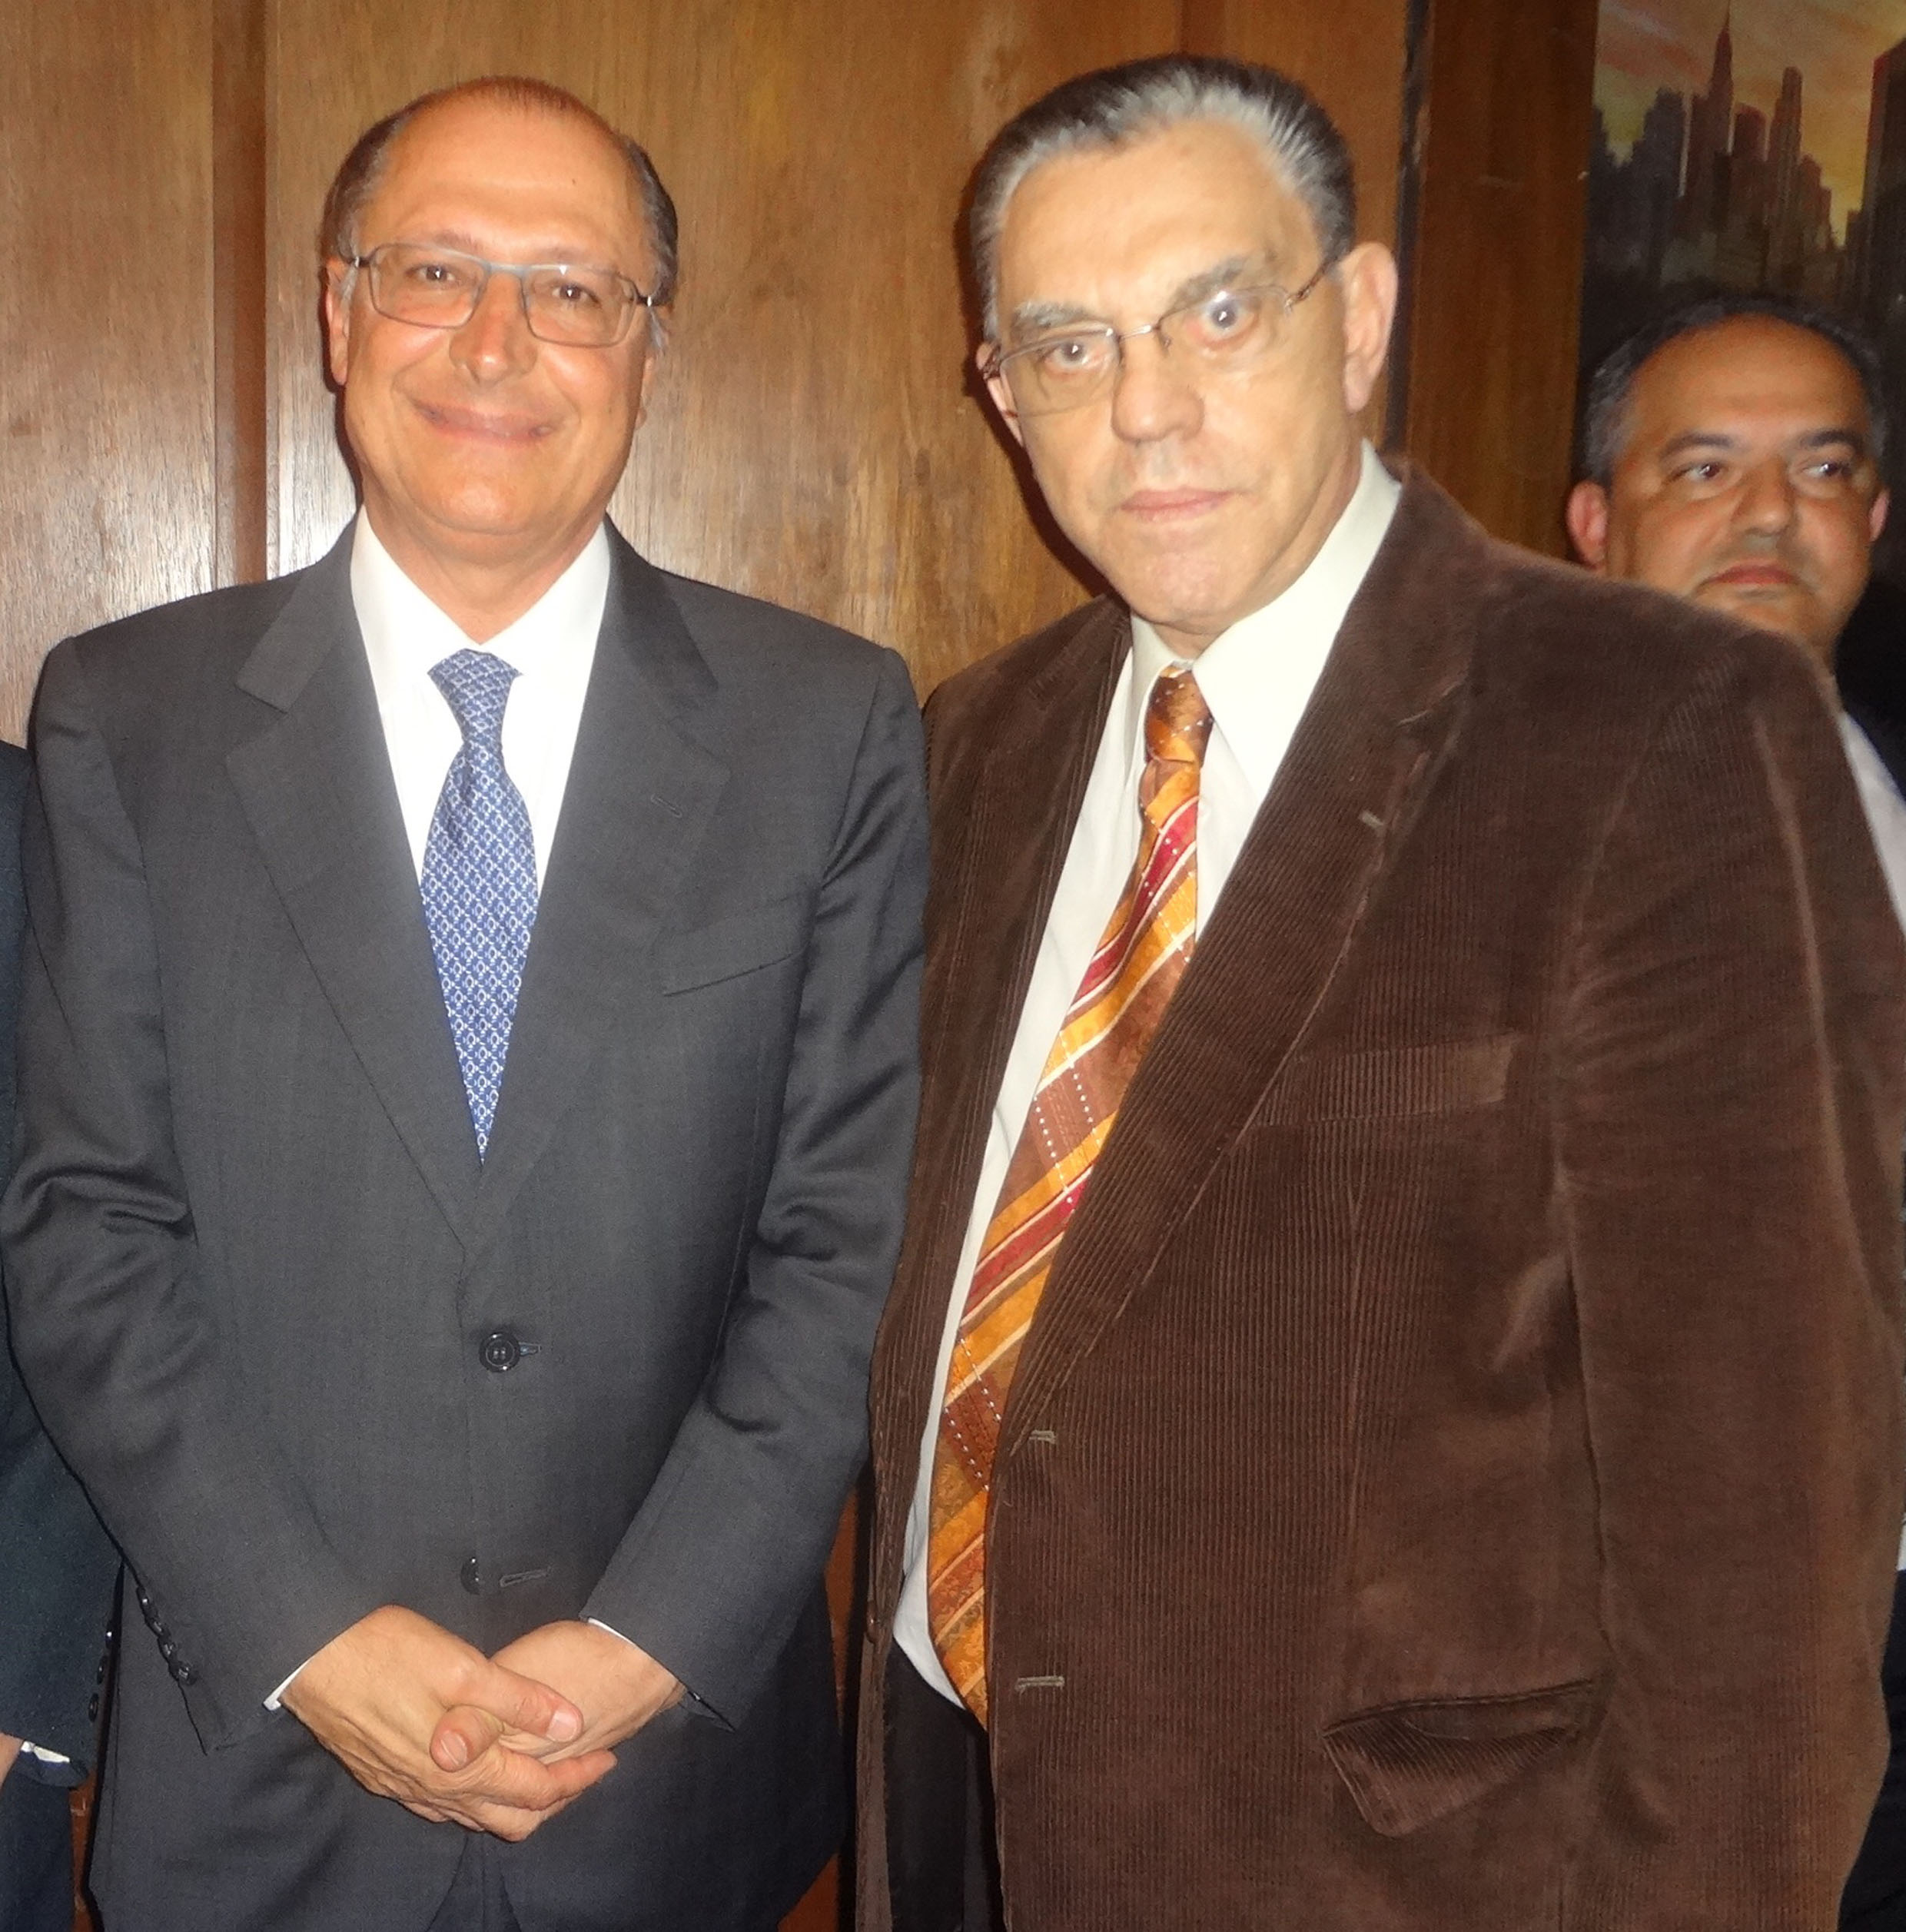 Alckmin e Ferrarini<a style='float:right;color:#ccc' href='https://www3.al.sp.gov.br/repositorio/noticia/N-10-2013/fg130511.jpg' target=_blank><i class='bi bi-zoom-in'></i> Clique para ver a imagem </a>